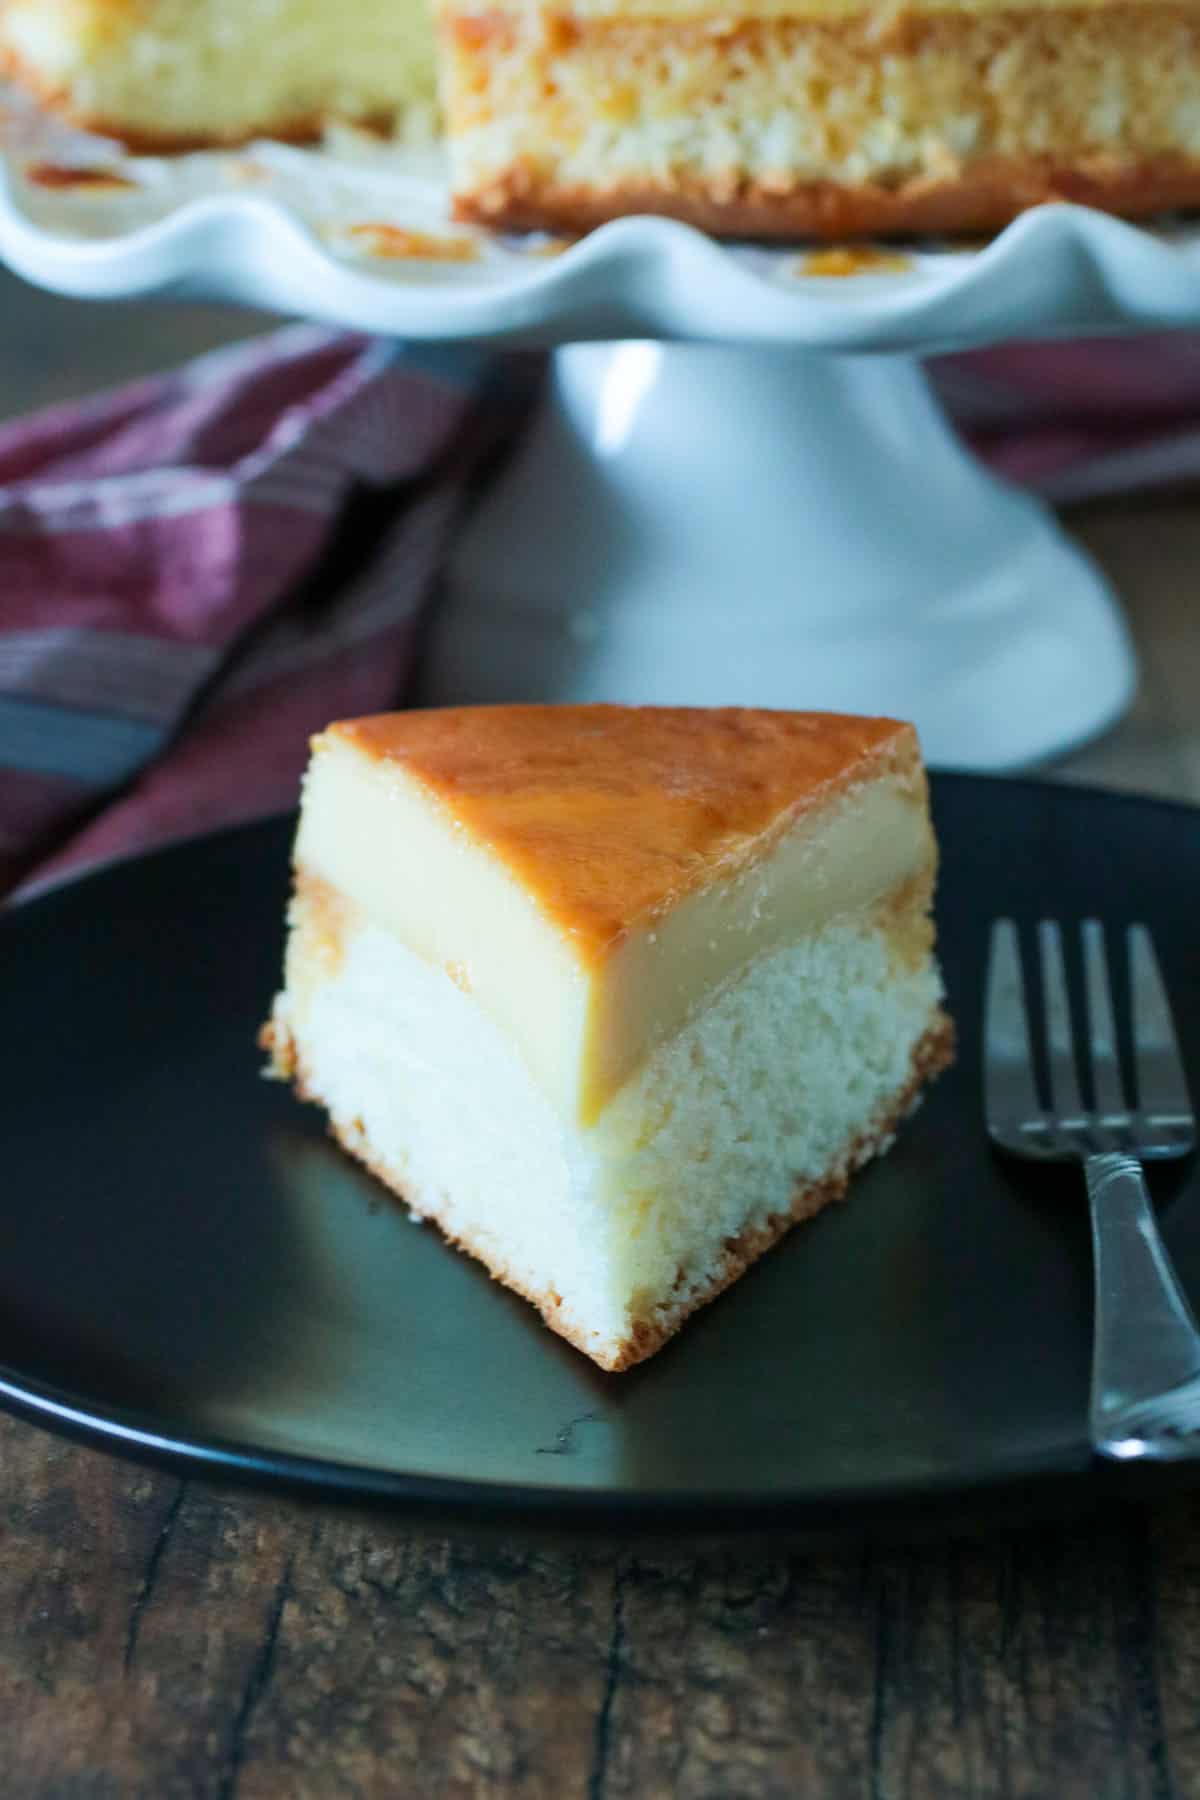 A slice of custard cake on a plate.